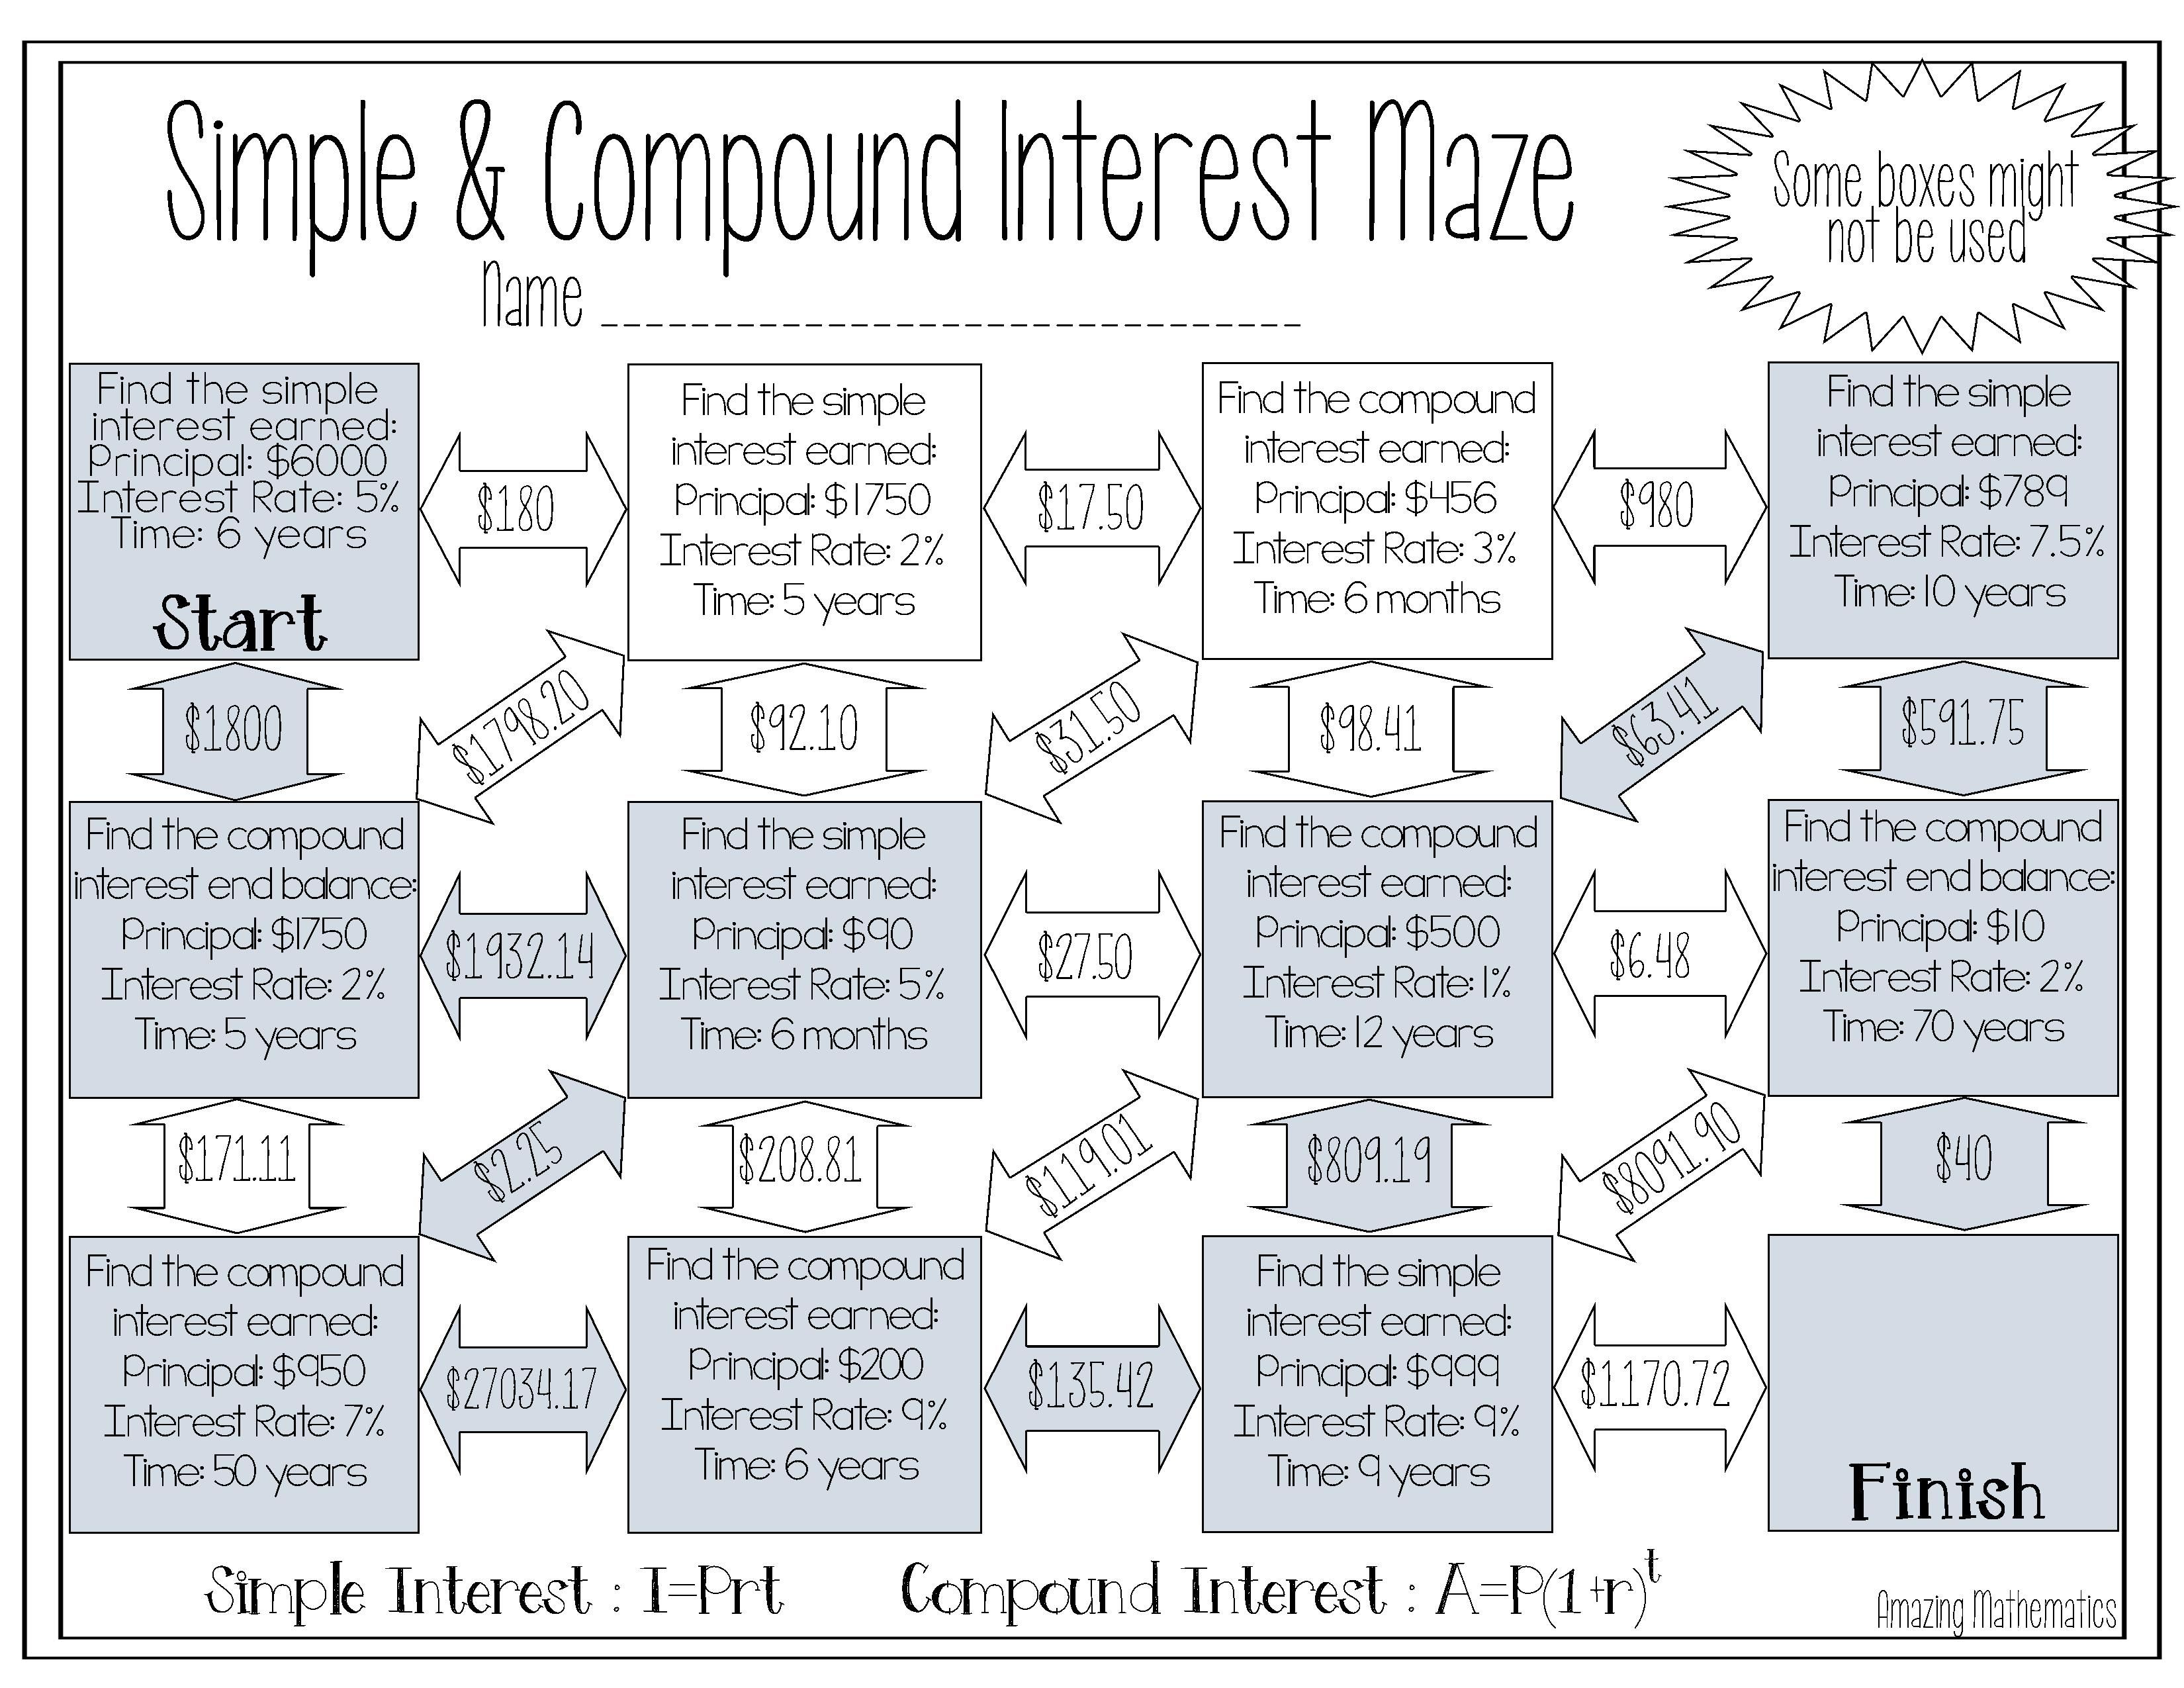 math-example-compound-interest-example-16-media4math